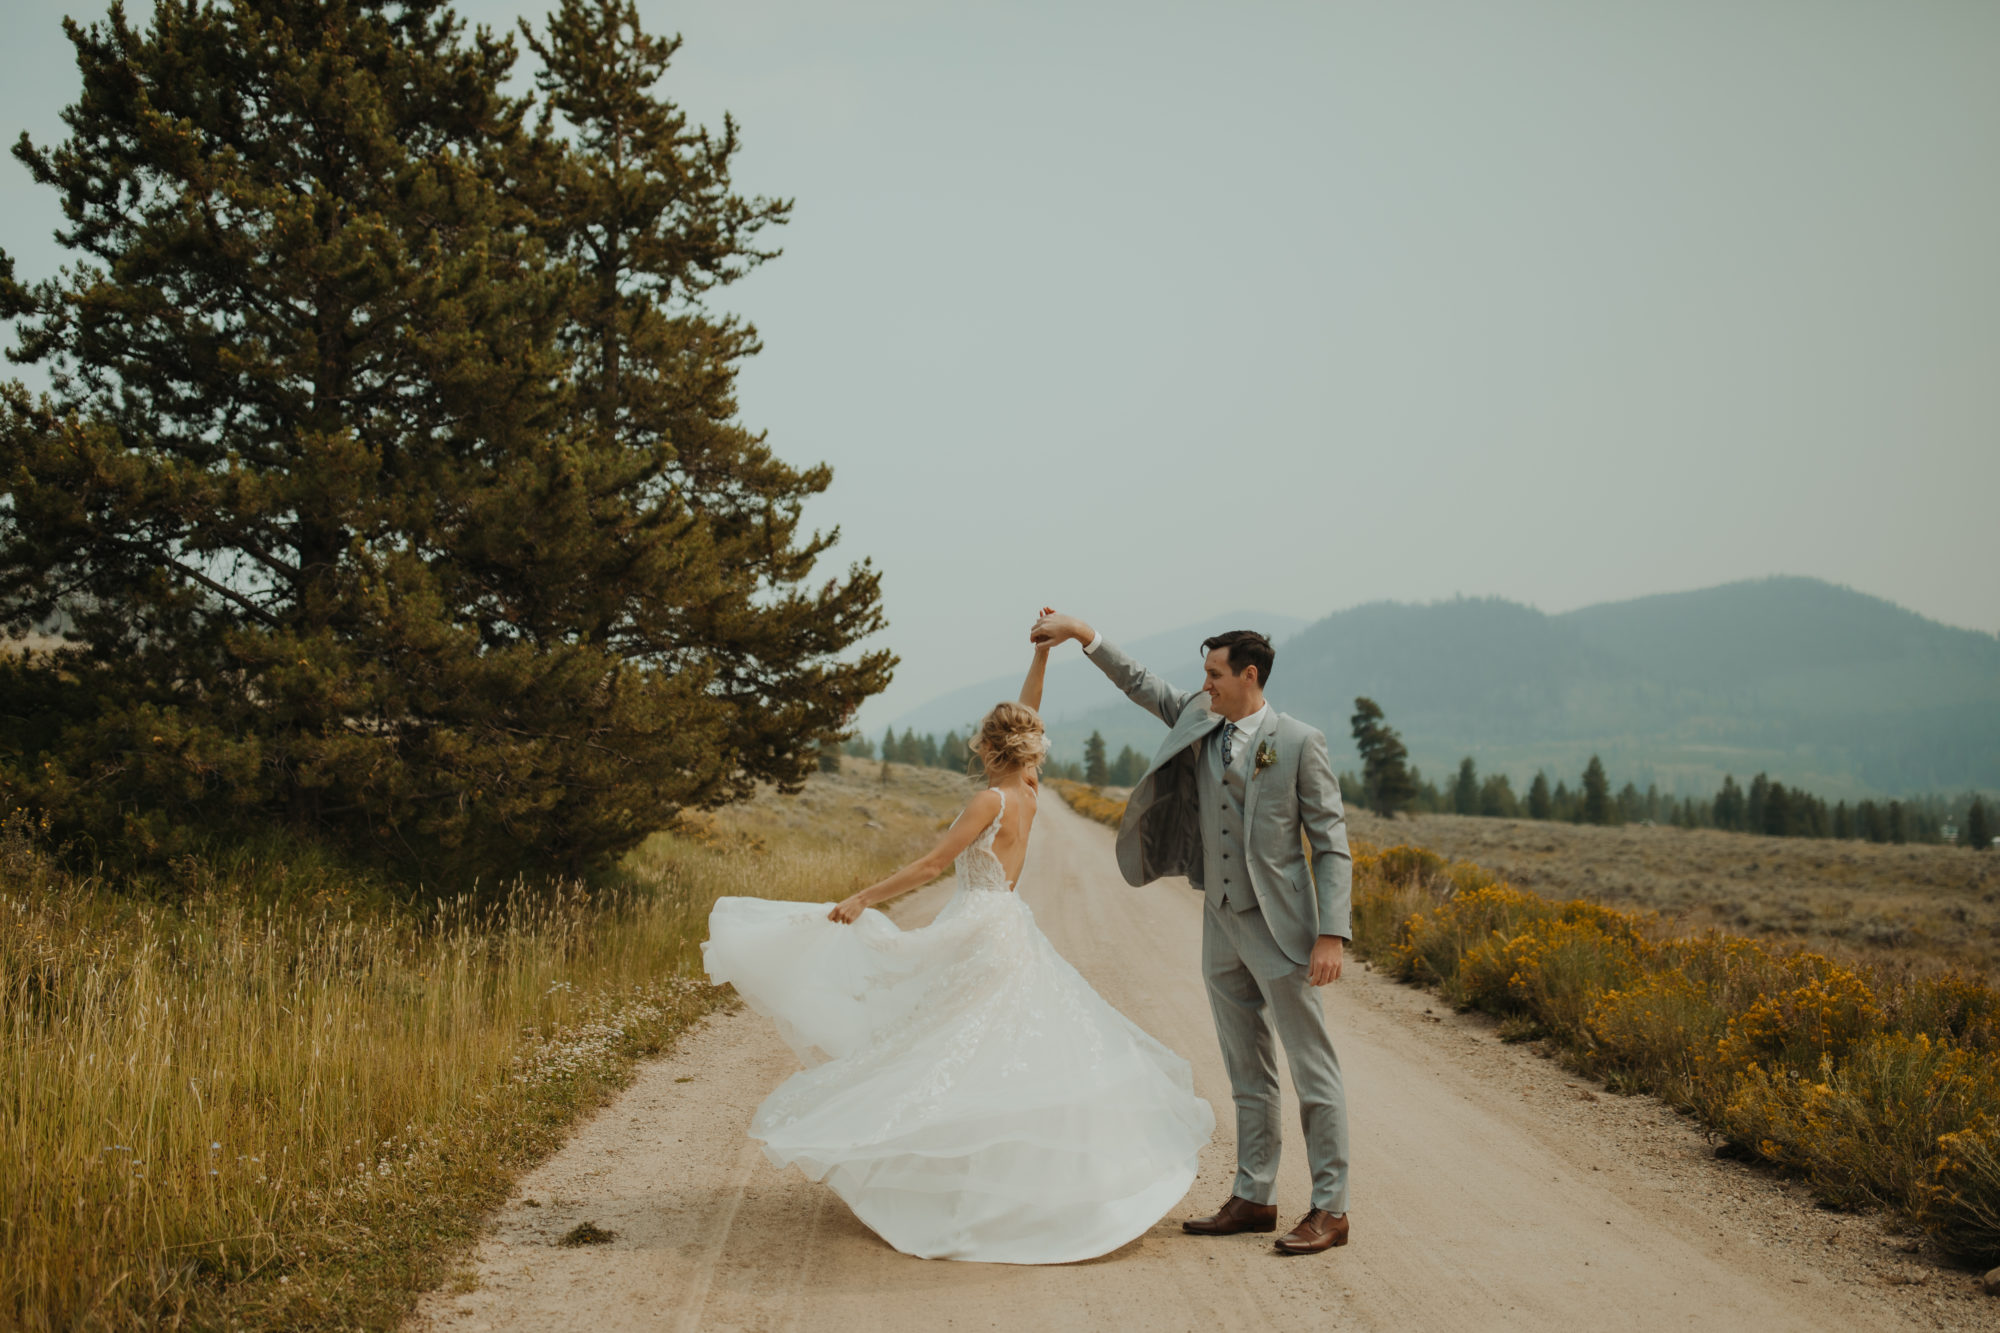 groom twirling bride around in a field